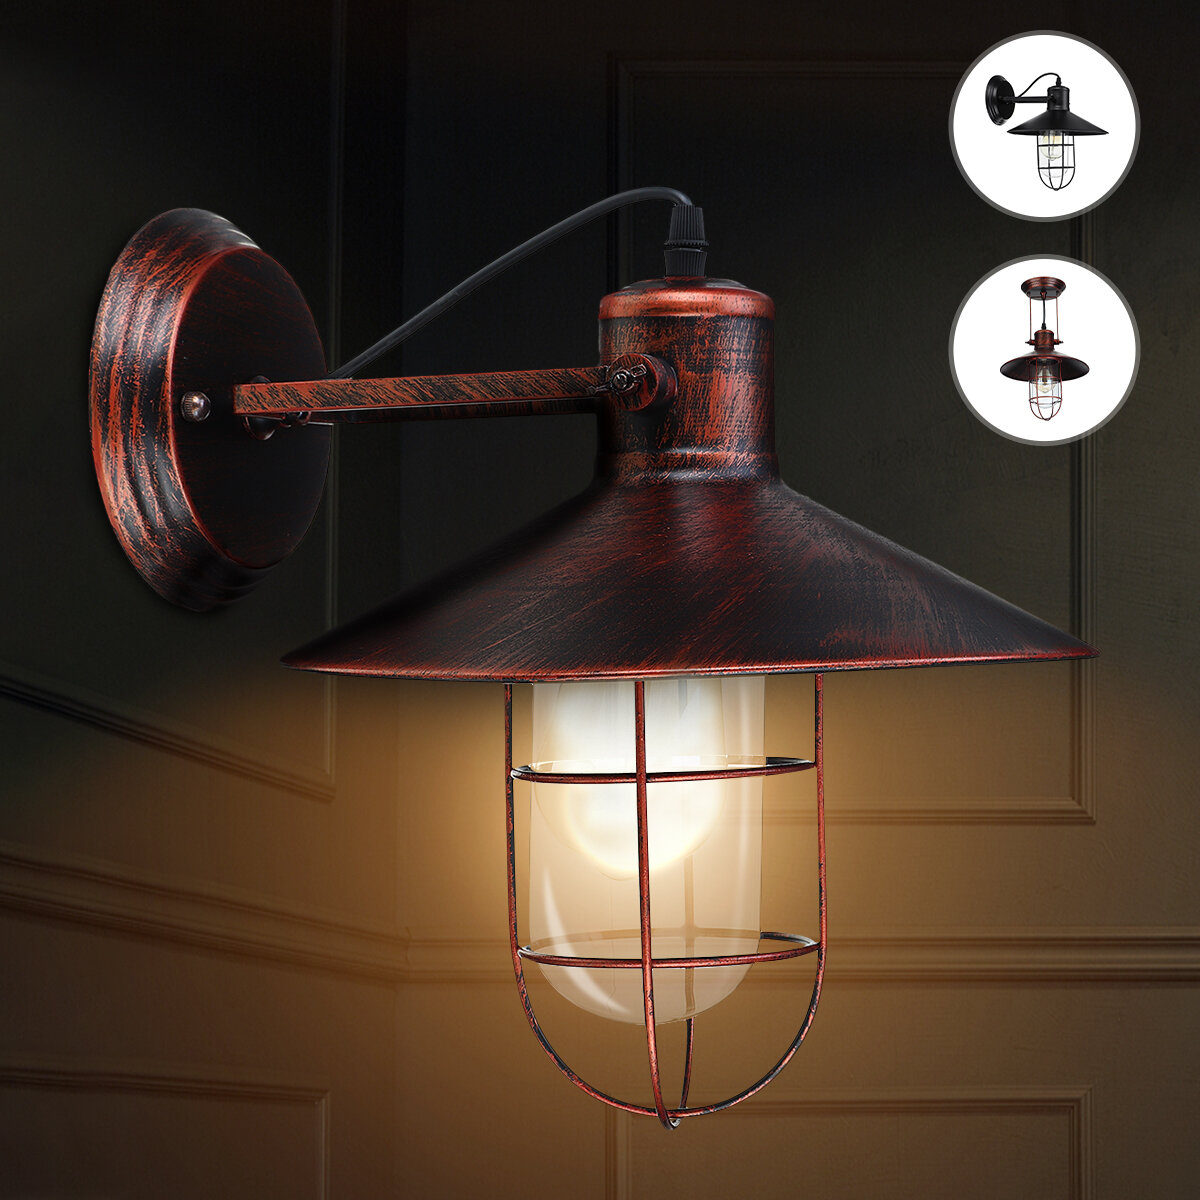 110-240V E27 Wall Lights Industrial Sconce Lamps 240? Adjustable Angle Vintage Art Decoration